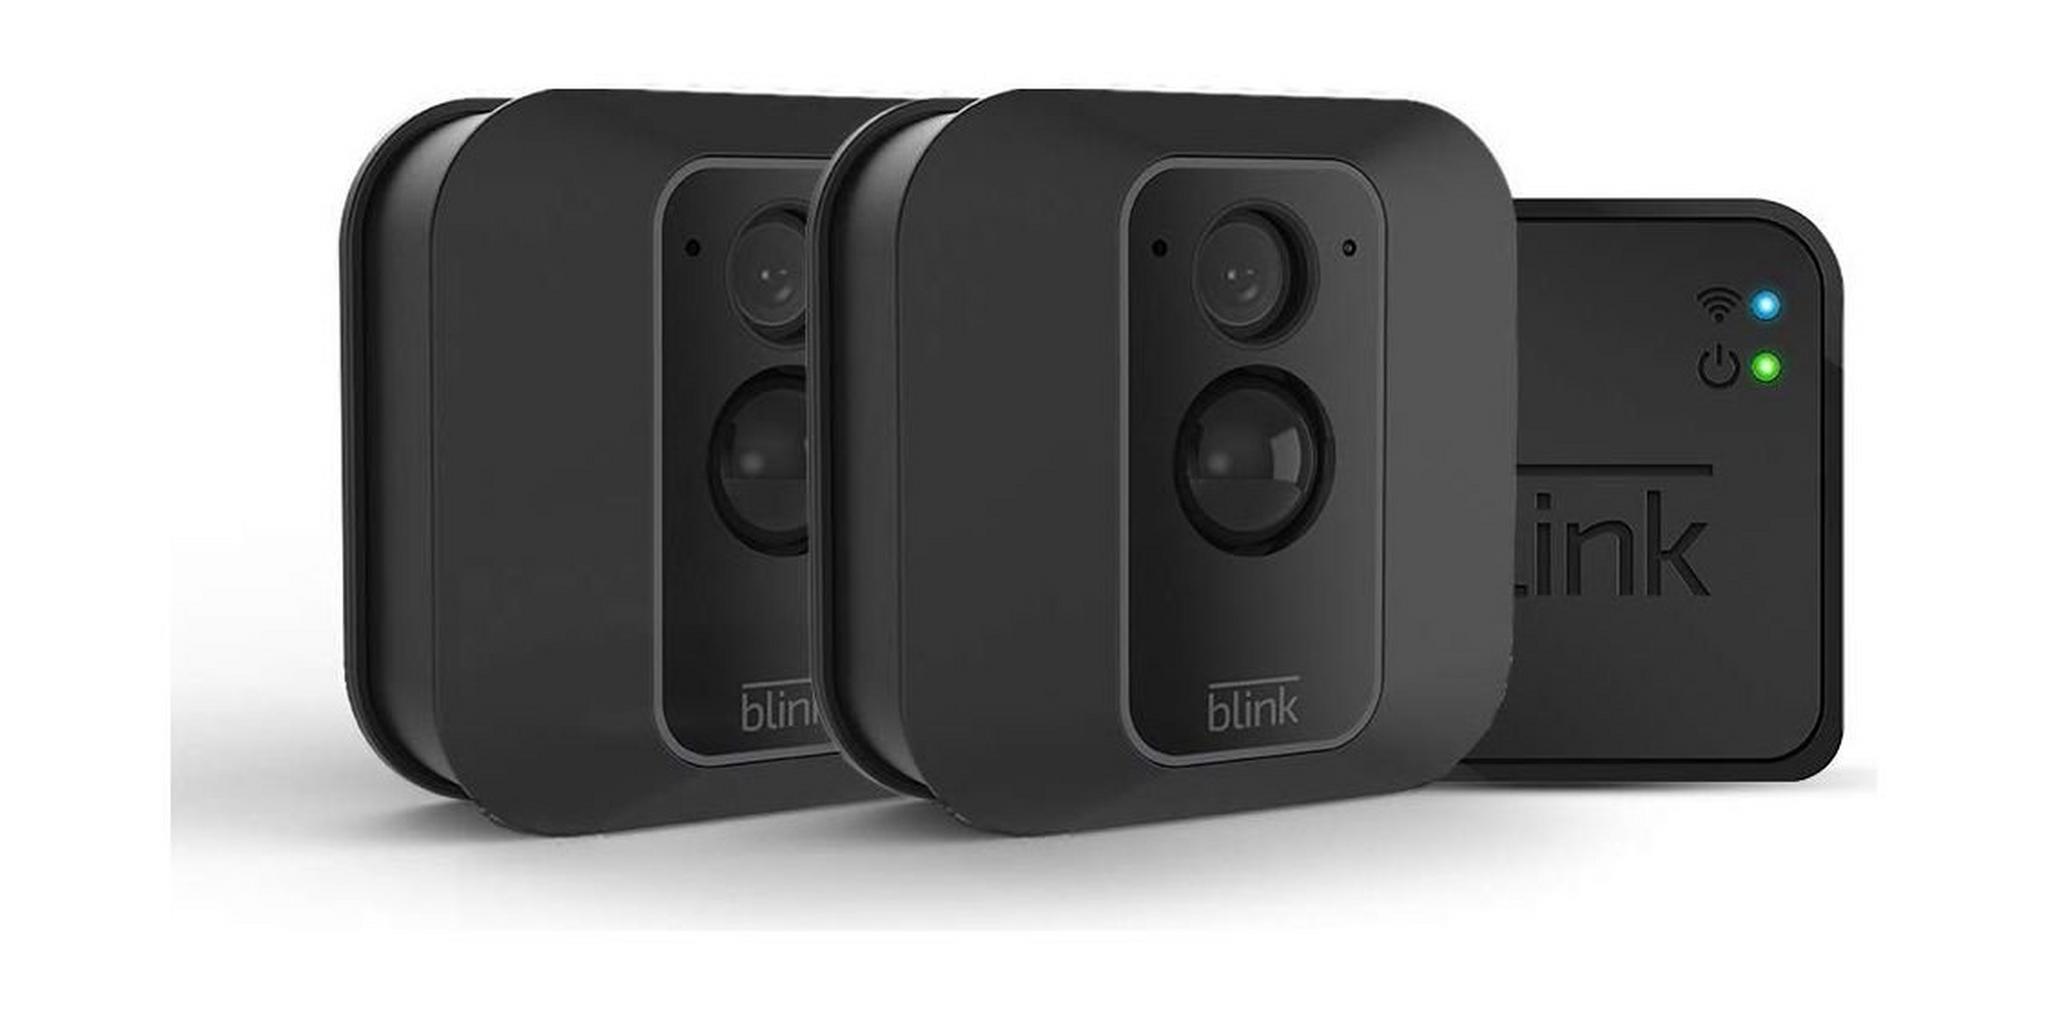 Amazon Blink XT2 Smart Security Camera - 2 Camera Kit